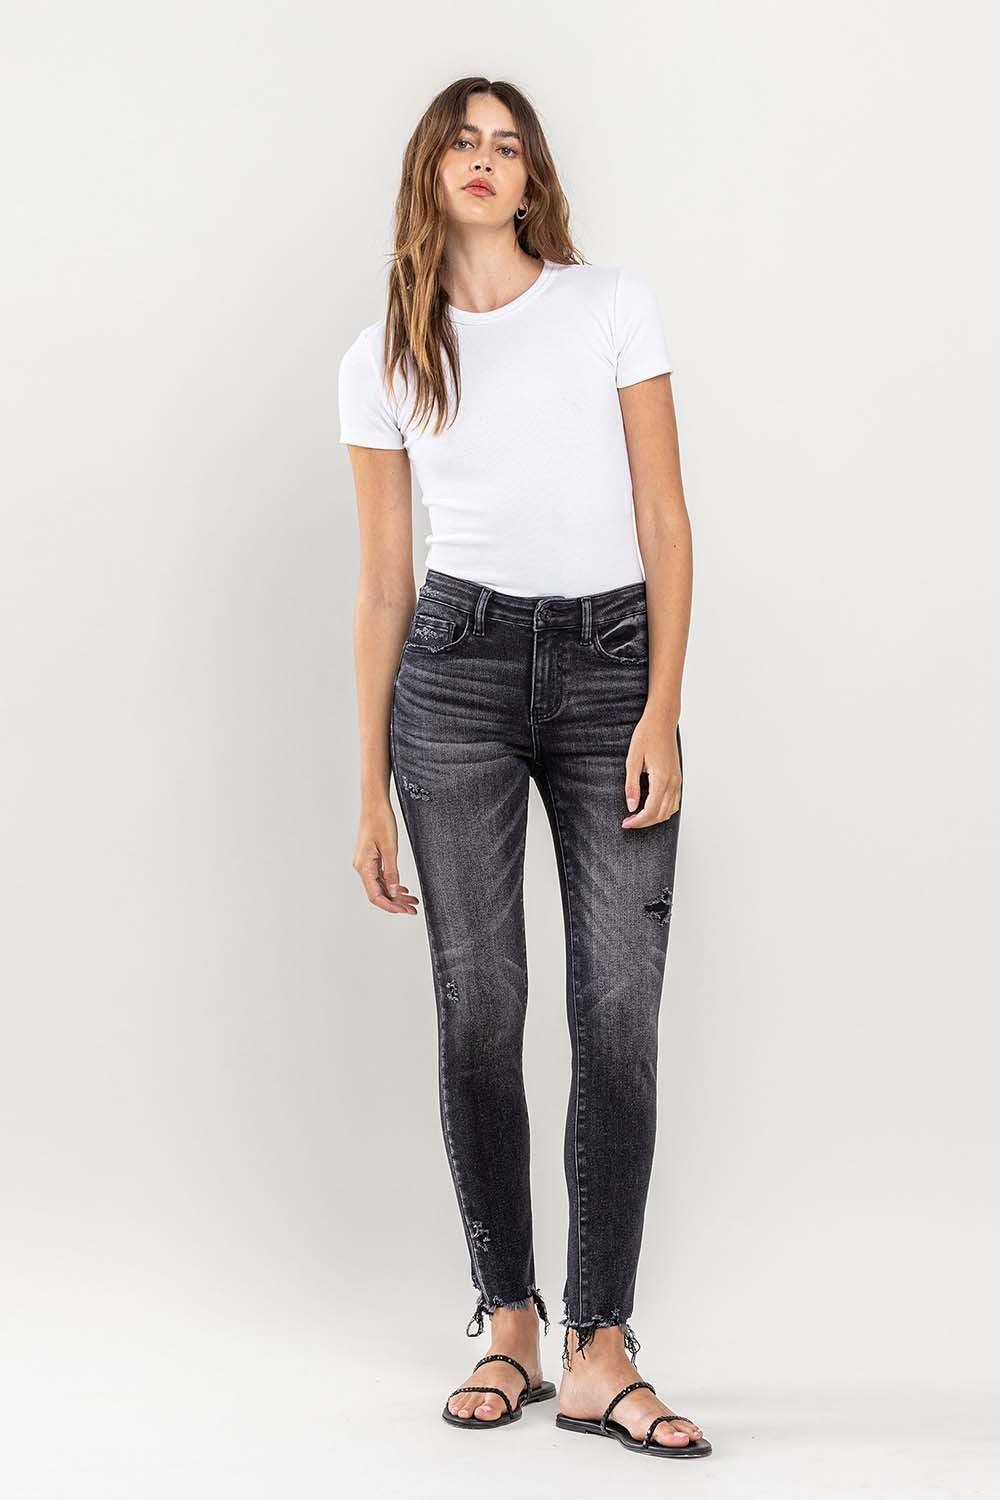 Lovervet Raw Hem Cropped Skinny Jeans - Jessiz Boutique